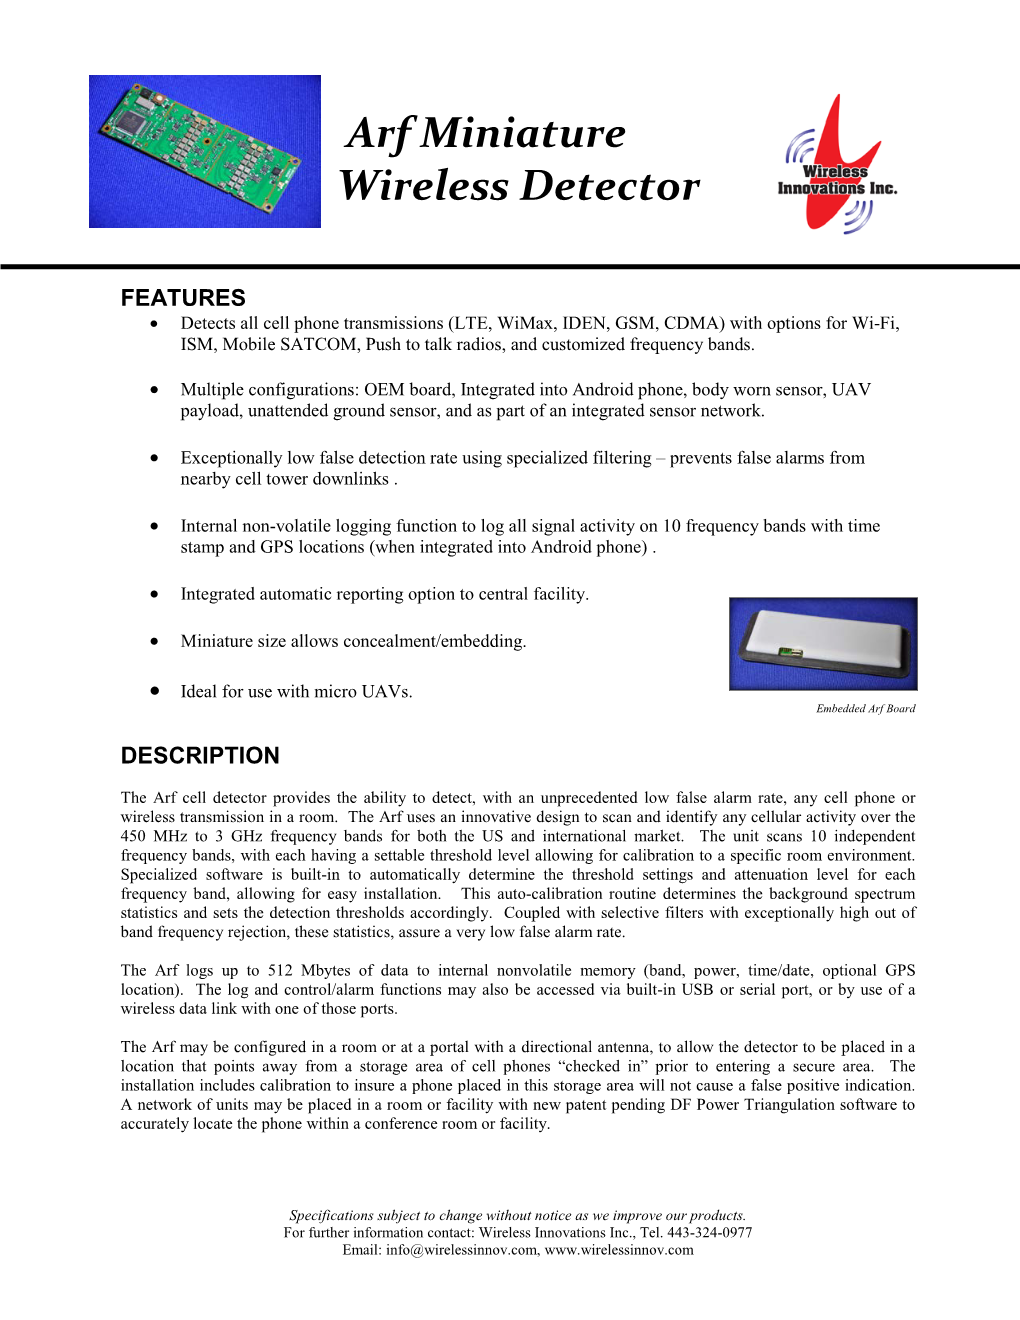 Arf Miniature Wireless Detector